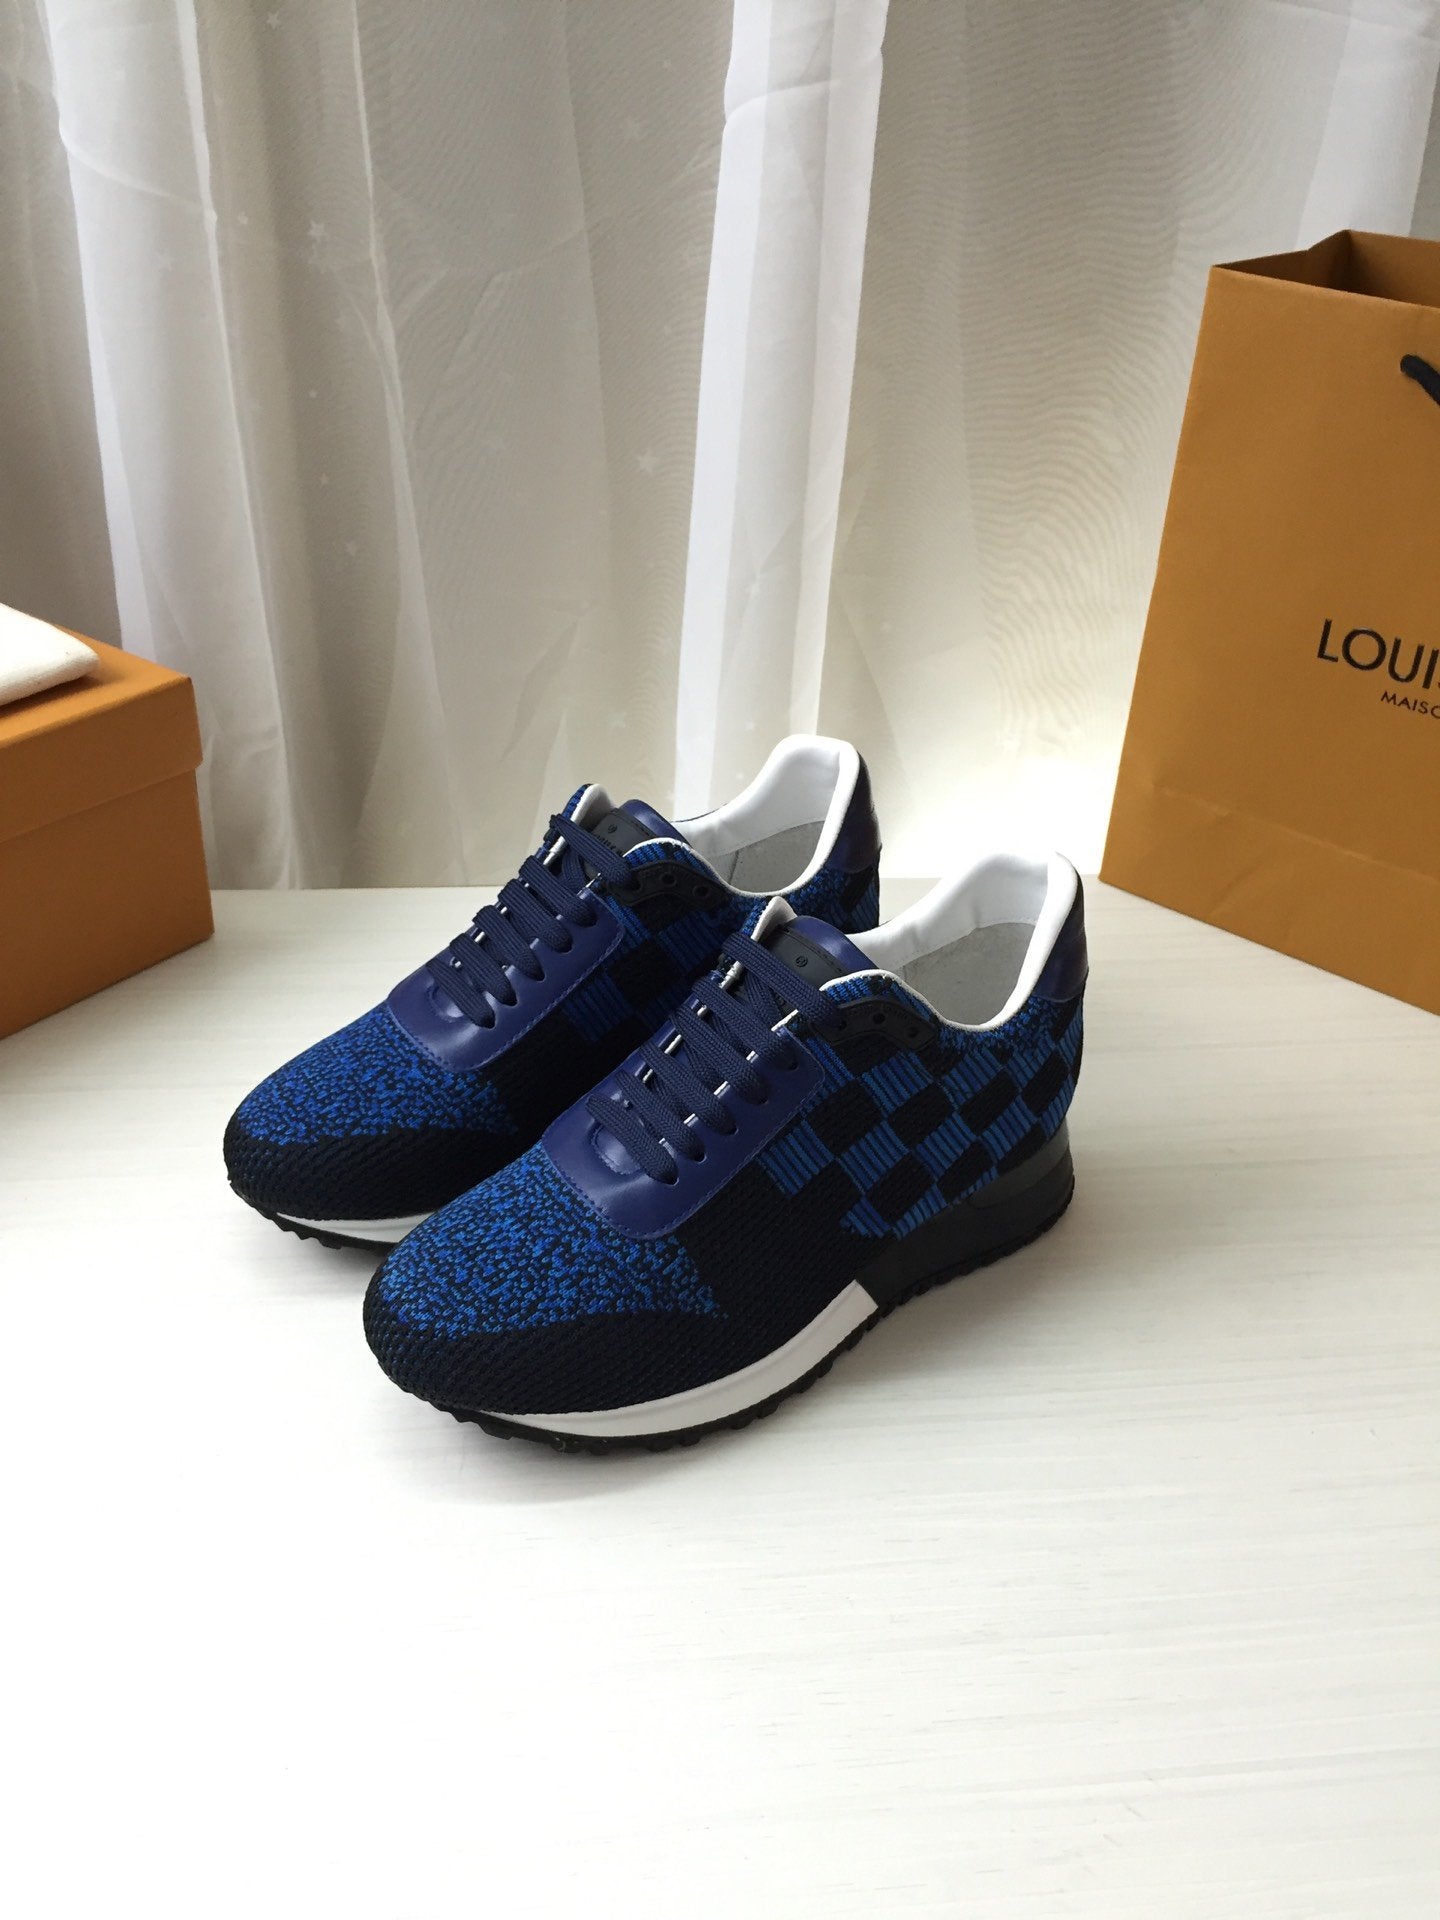 LV Louis Vuitton Men's Leather Run Away Sneakers Shoes